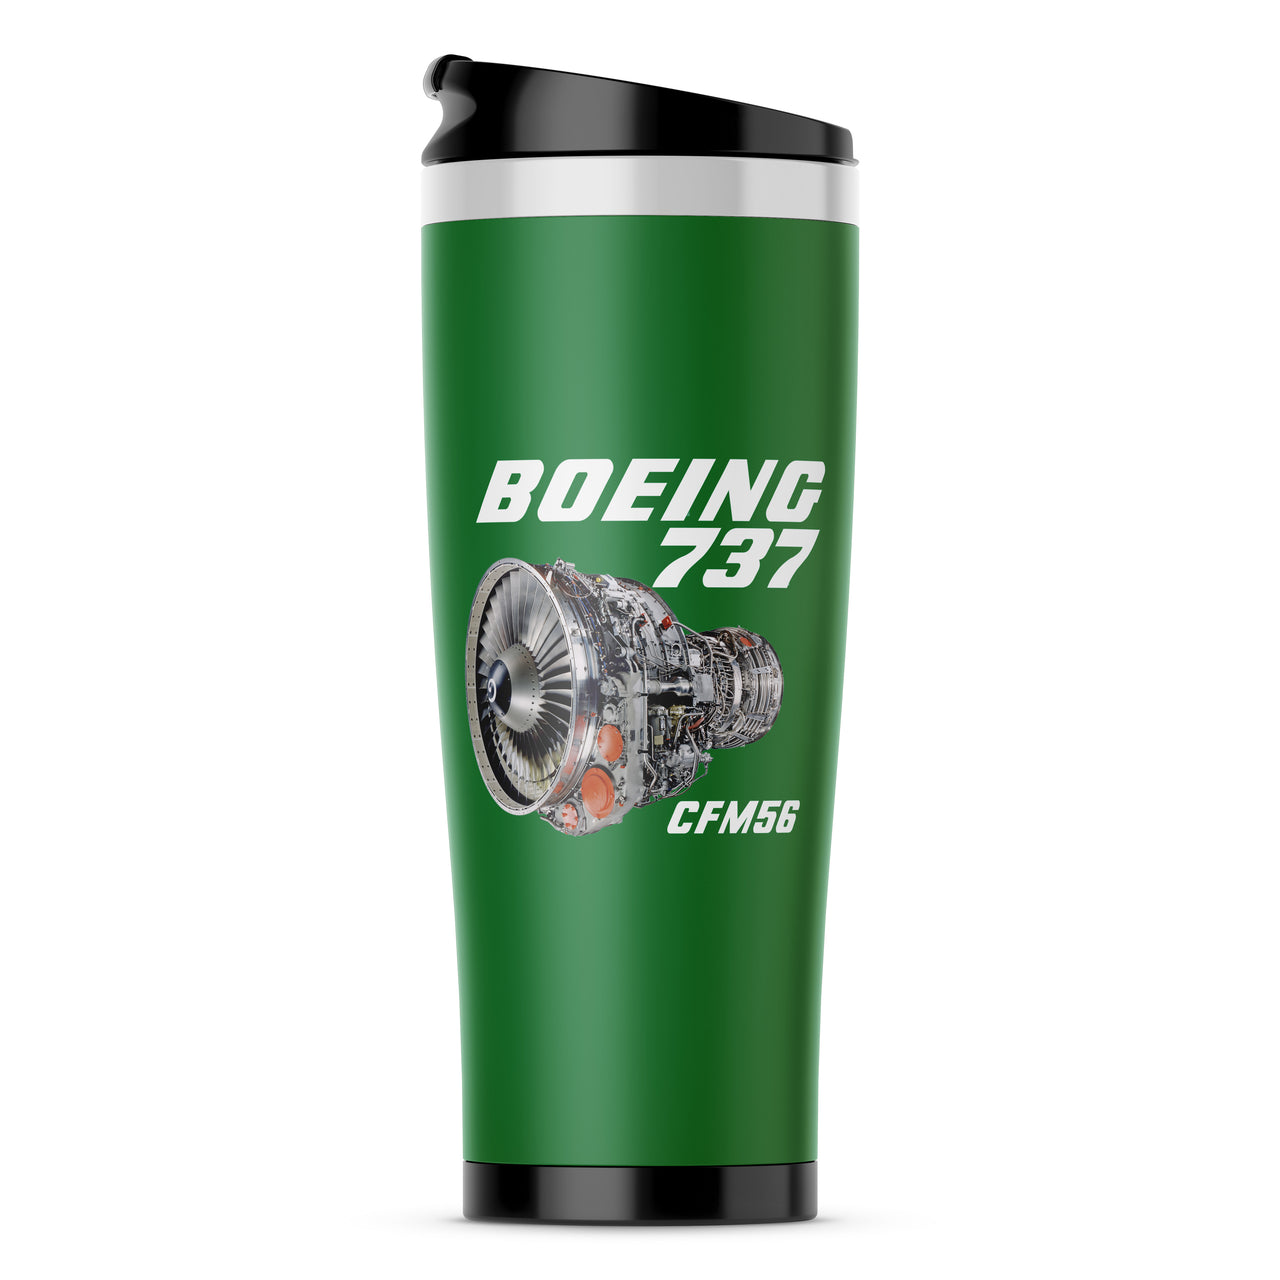 Boeing 737 Engine & CFM56 Designed Travel Mugs